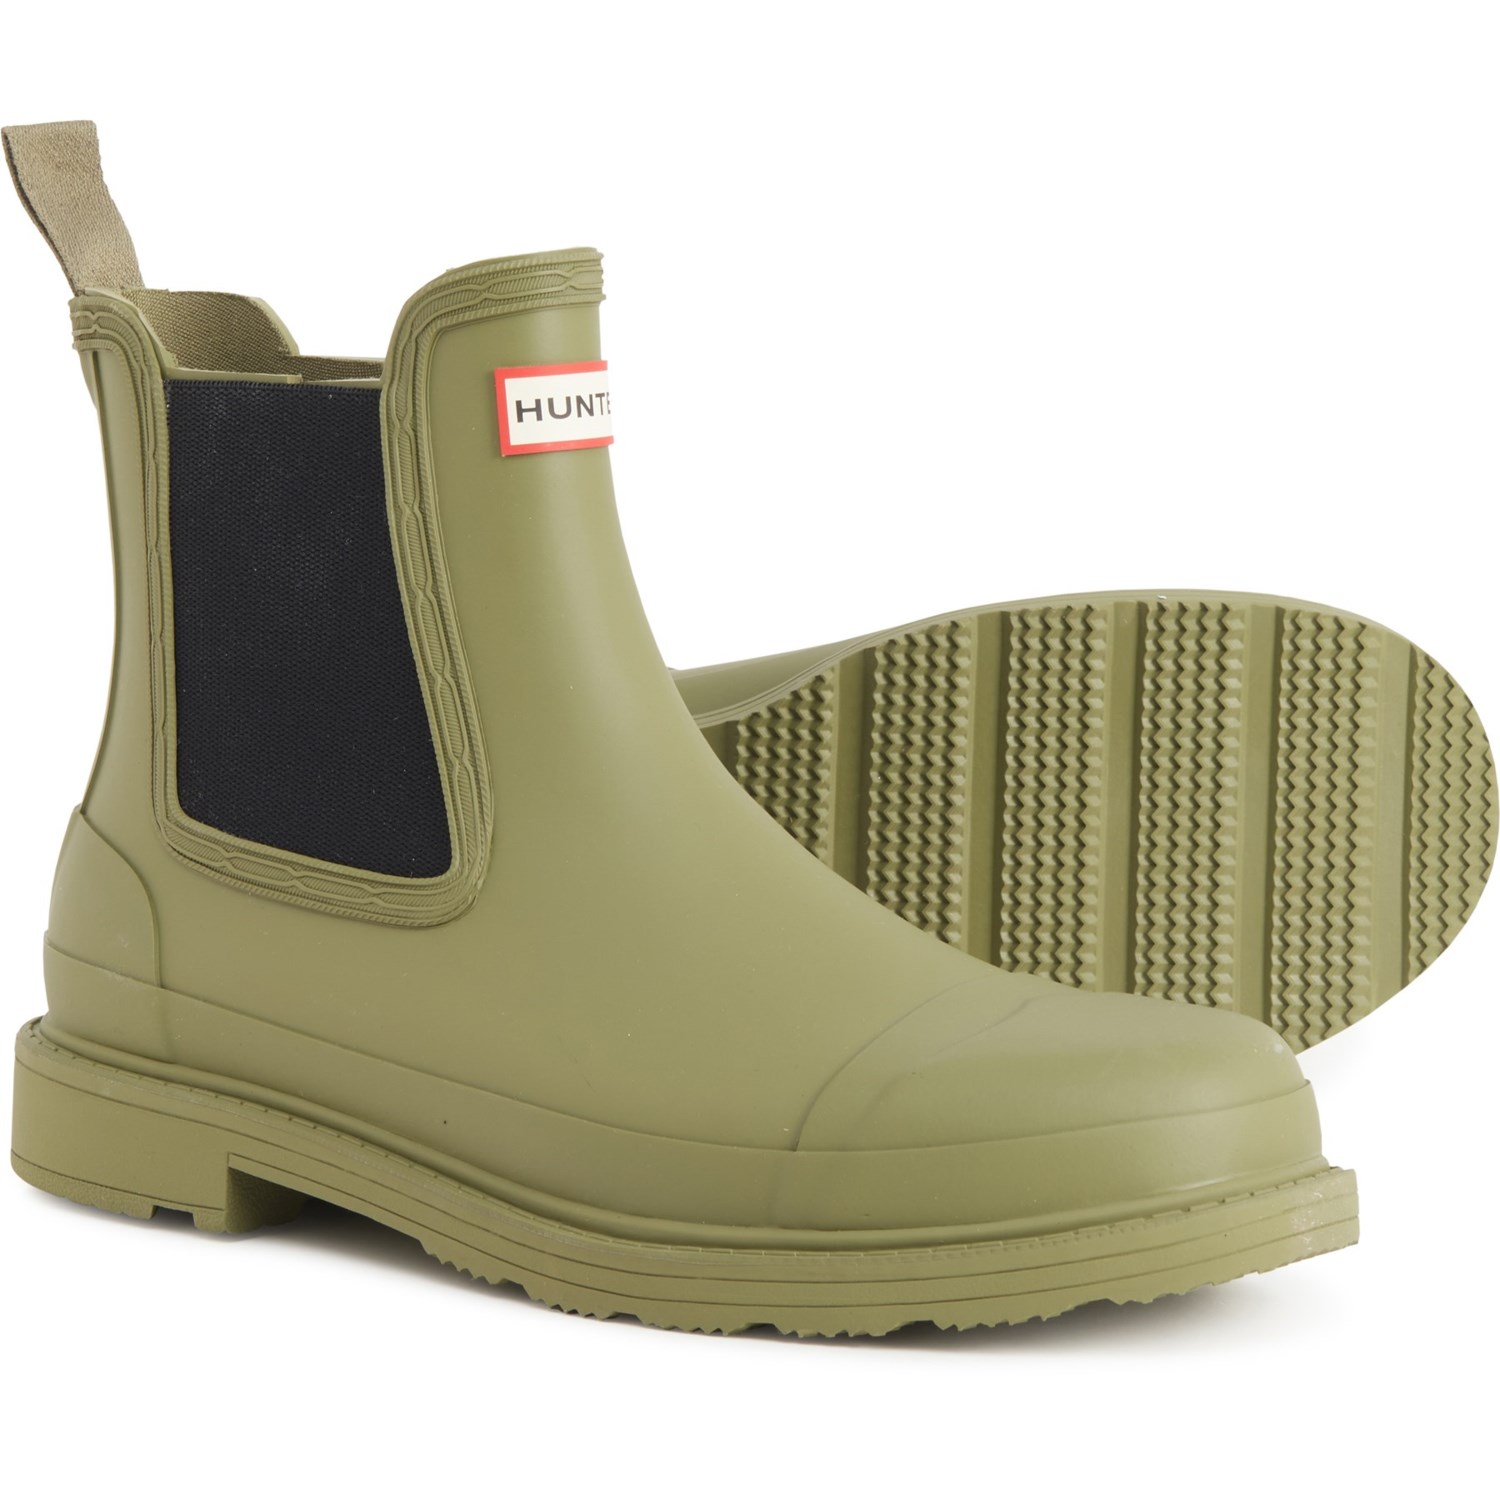 HUNTER Commando Chelsea Rain Boots - Waterproof (For Women)